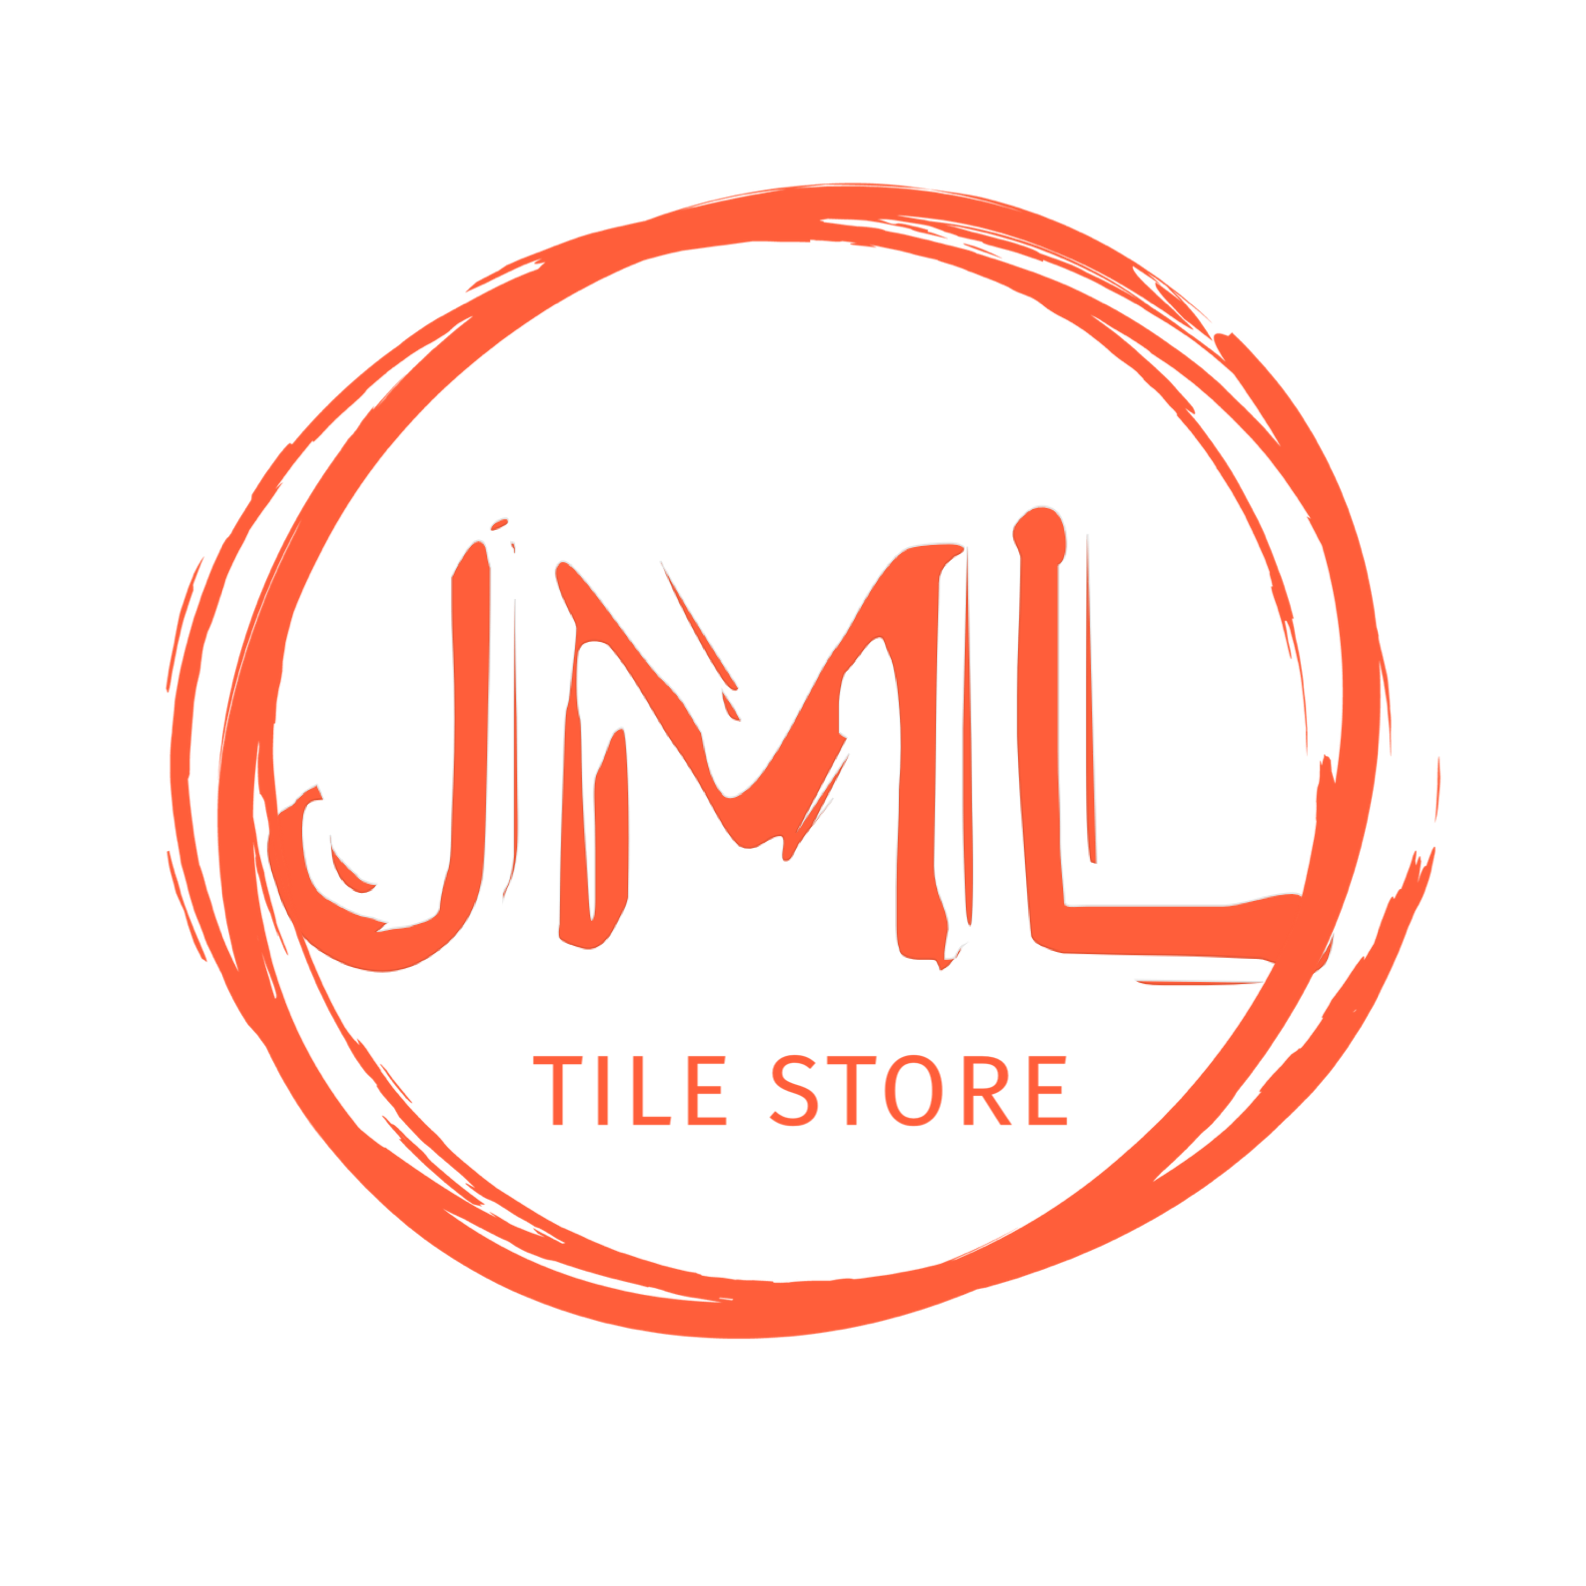 JML Tile Store